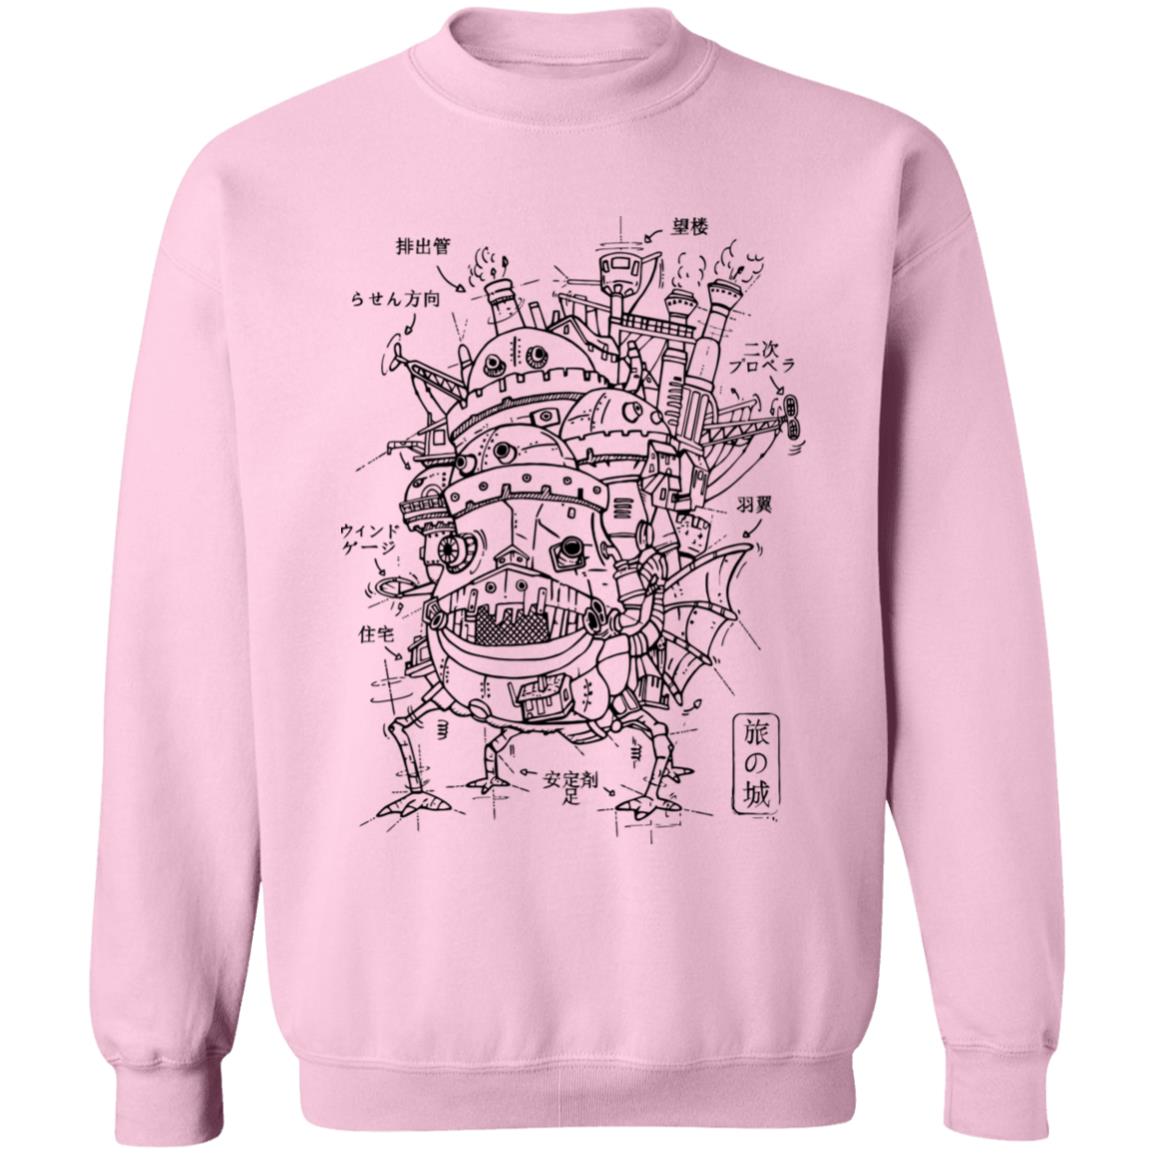 Howl’s Moving Castle Sketch Sweatshirt